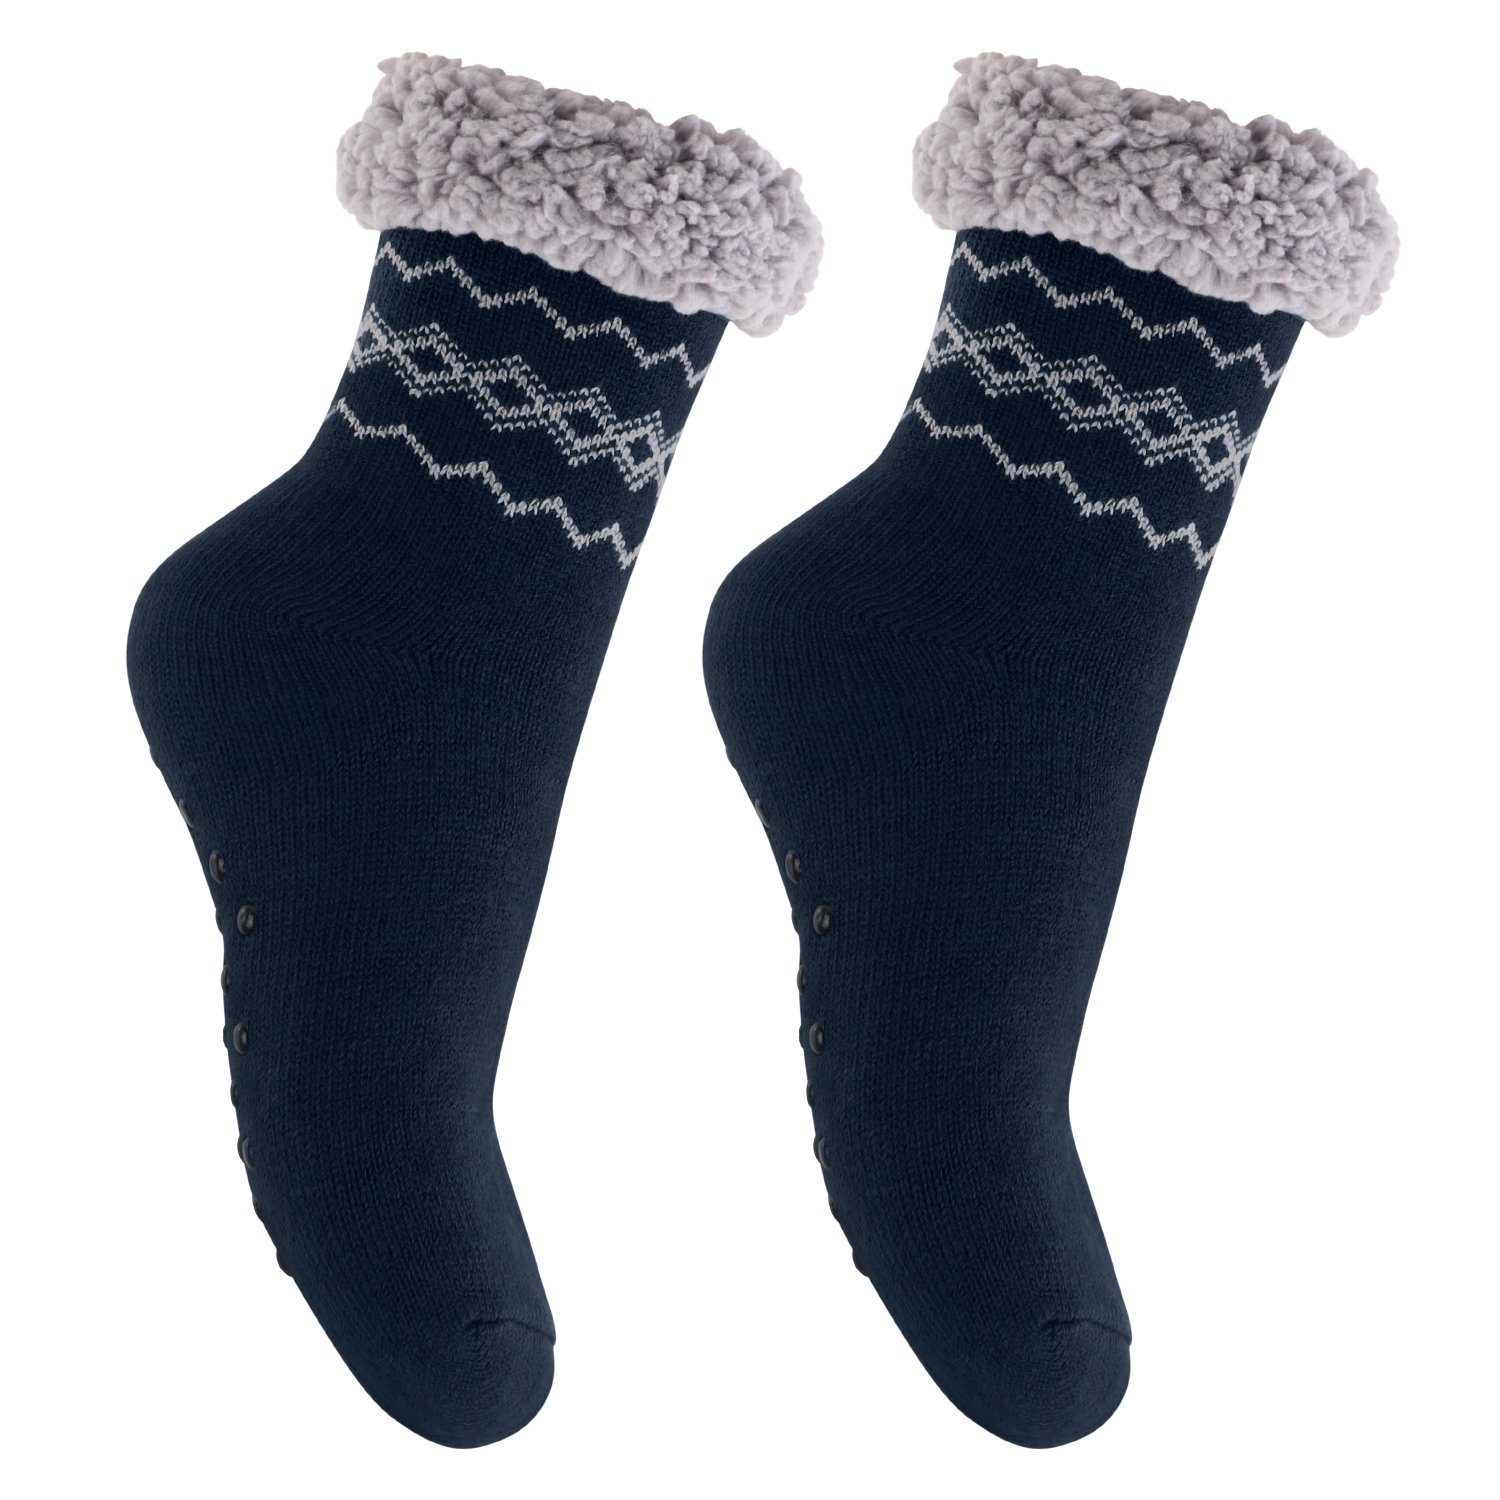 Footstar ABS-Socken Winter Haussocken für Damen & Herren (1/2 Paar) Kuschelsocken 2 x Navy | Stoppersocken